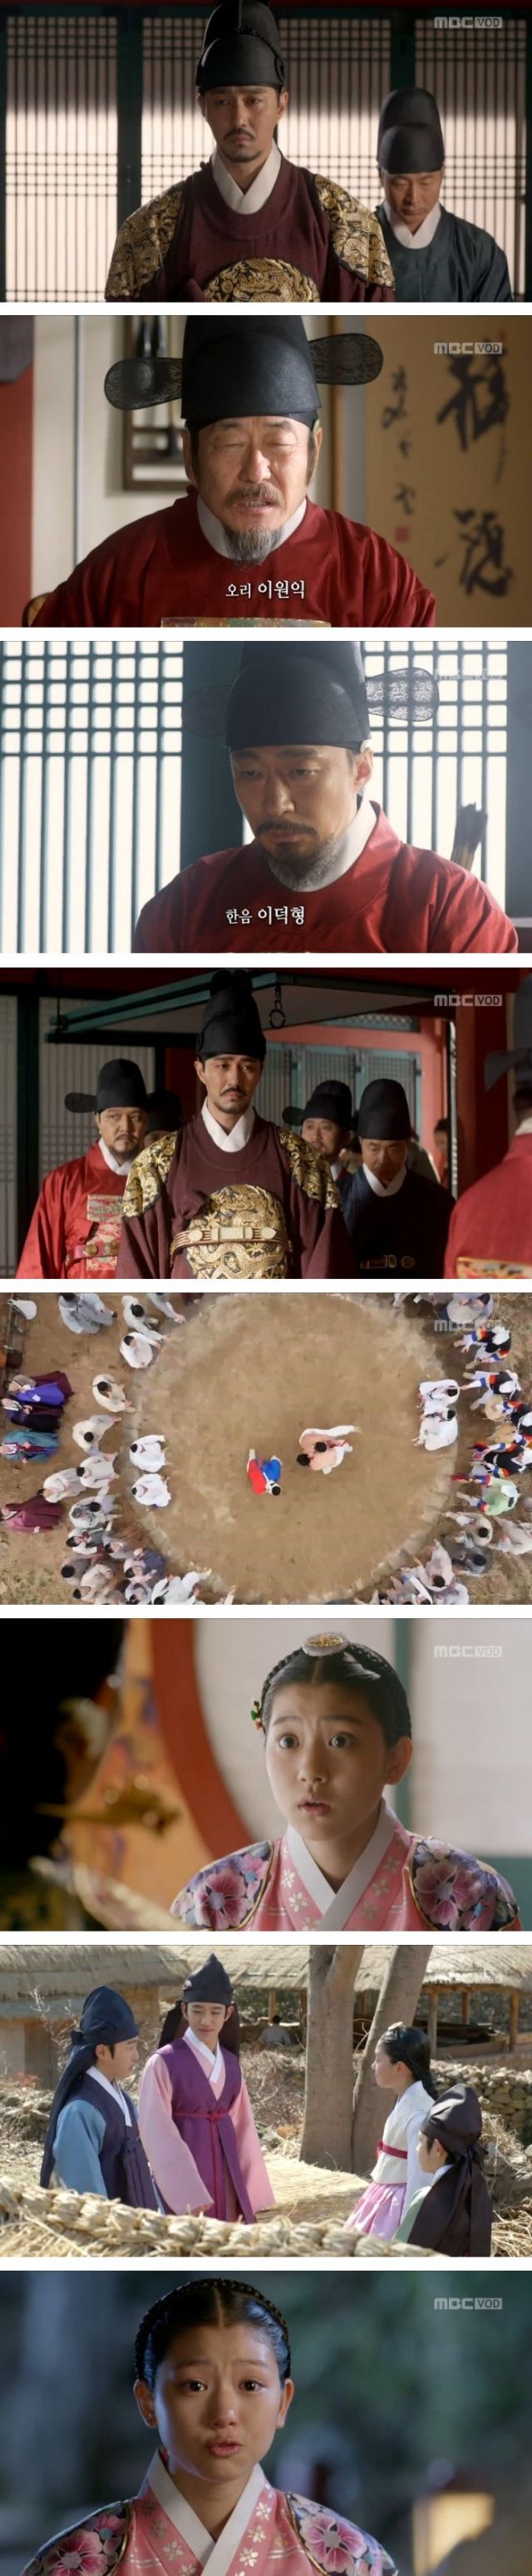 episode 3 captures for the Korean drama 'Splendid Politics'